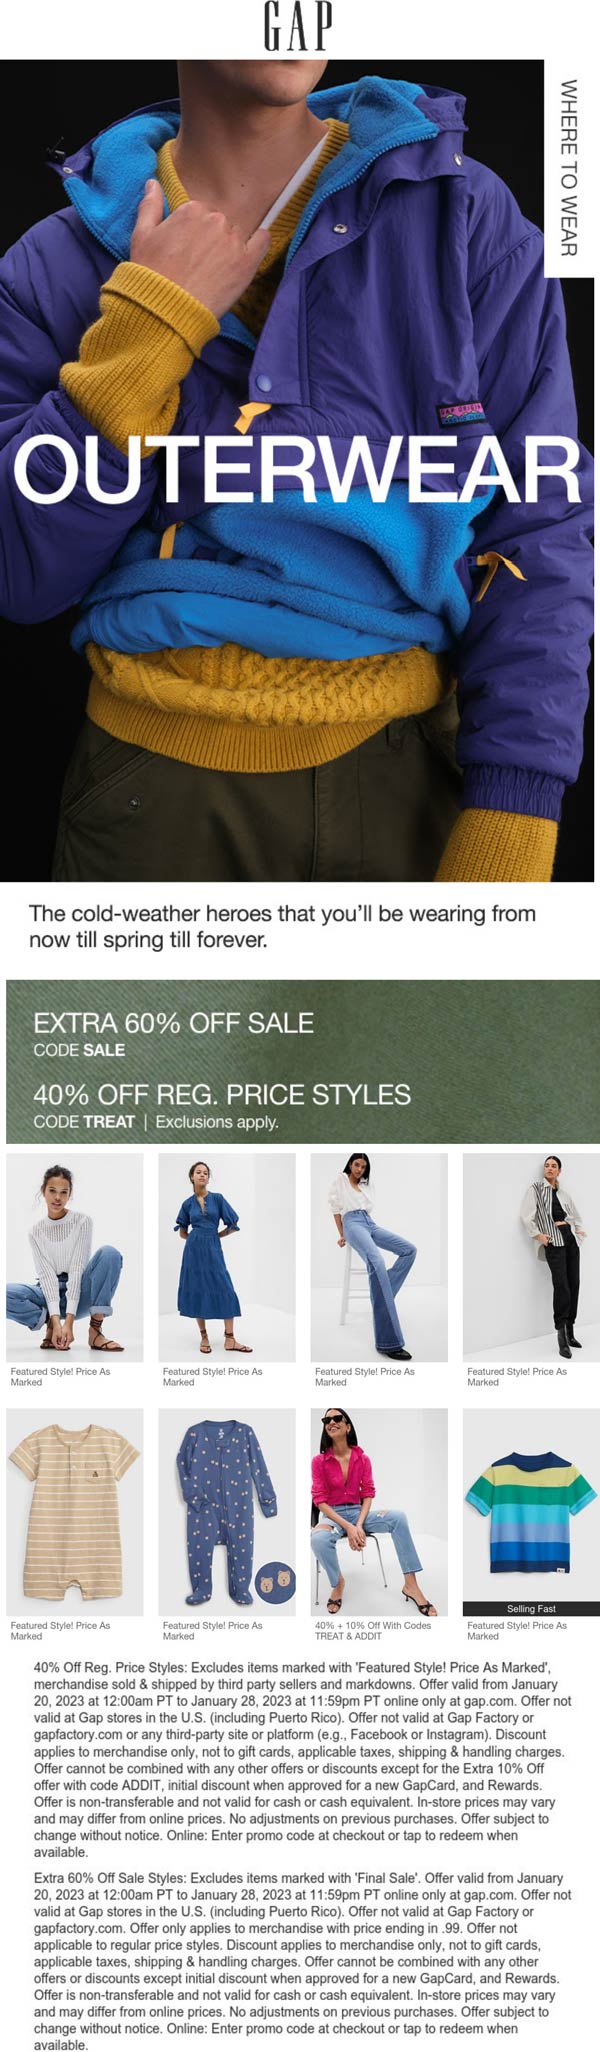 Gap stores Coupon  40% off regular & 60% off sale styles at Gap via promo code TREAT #gap 